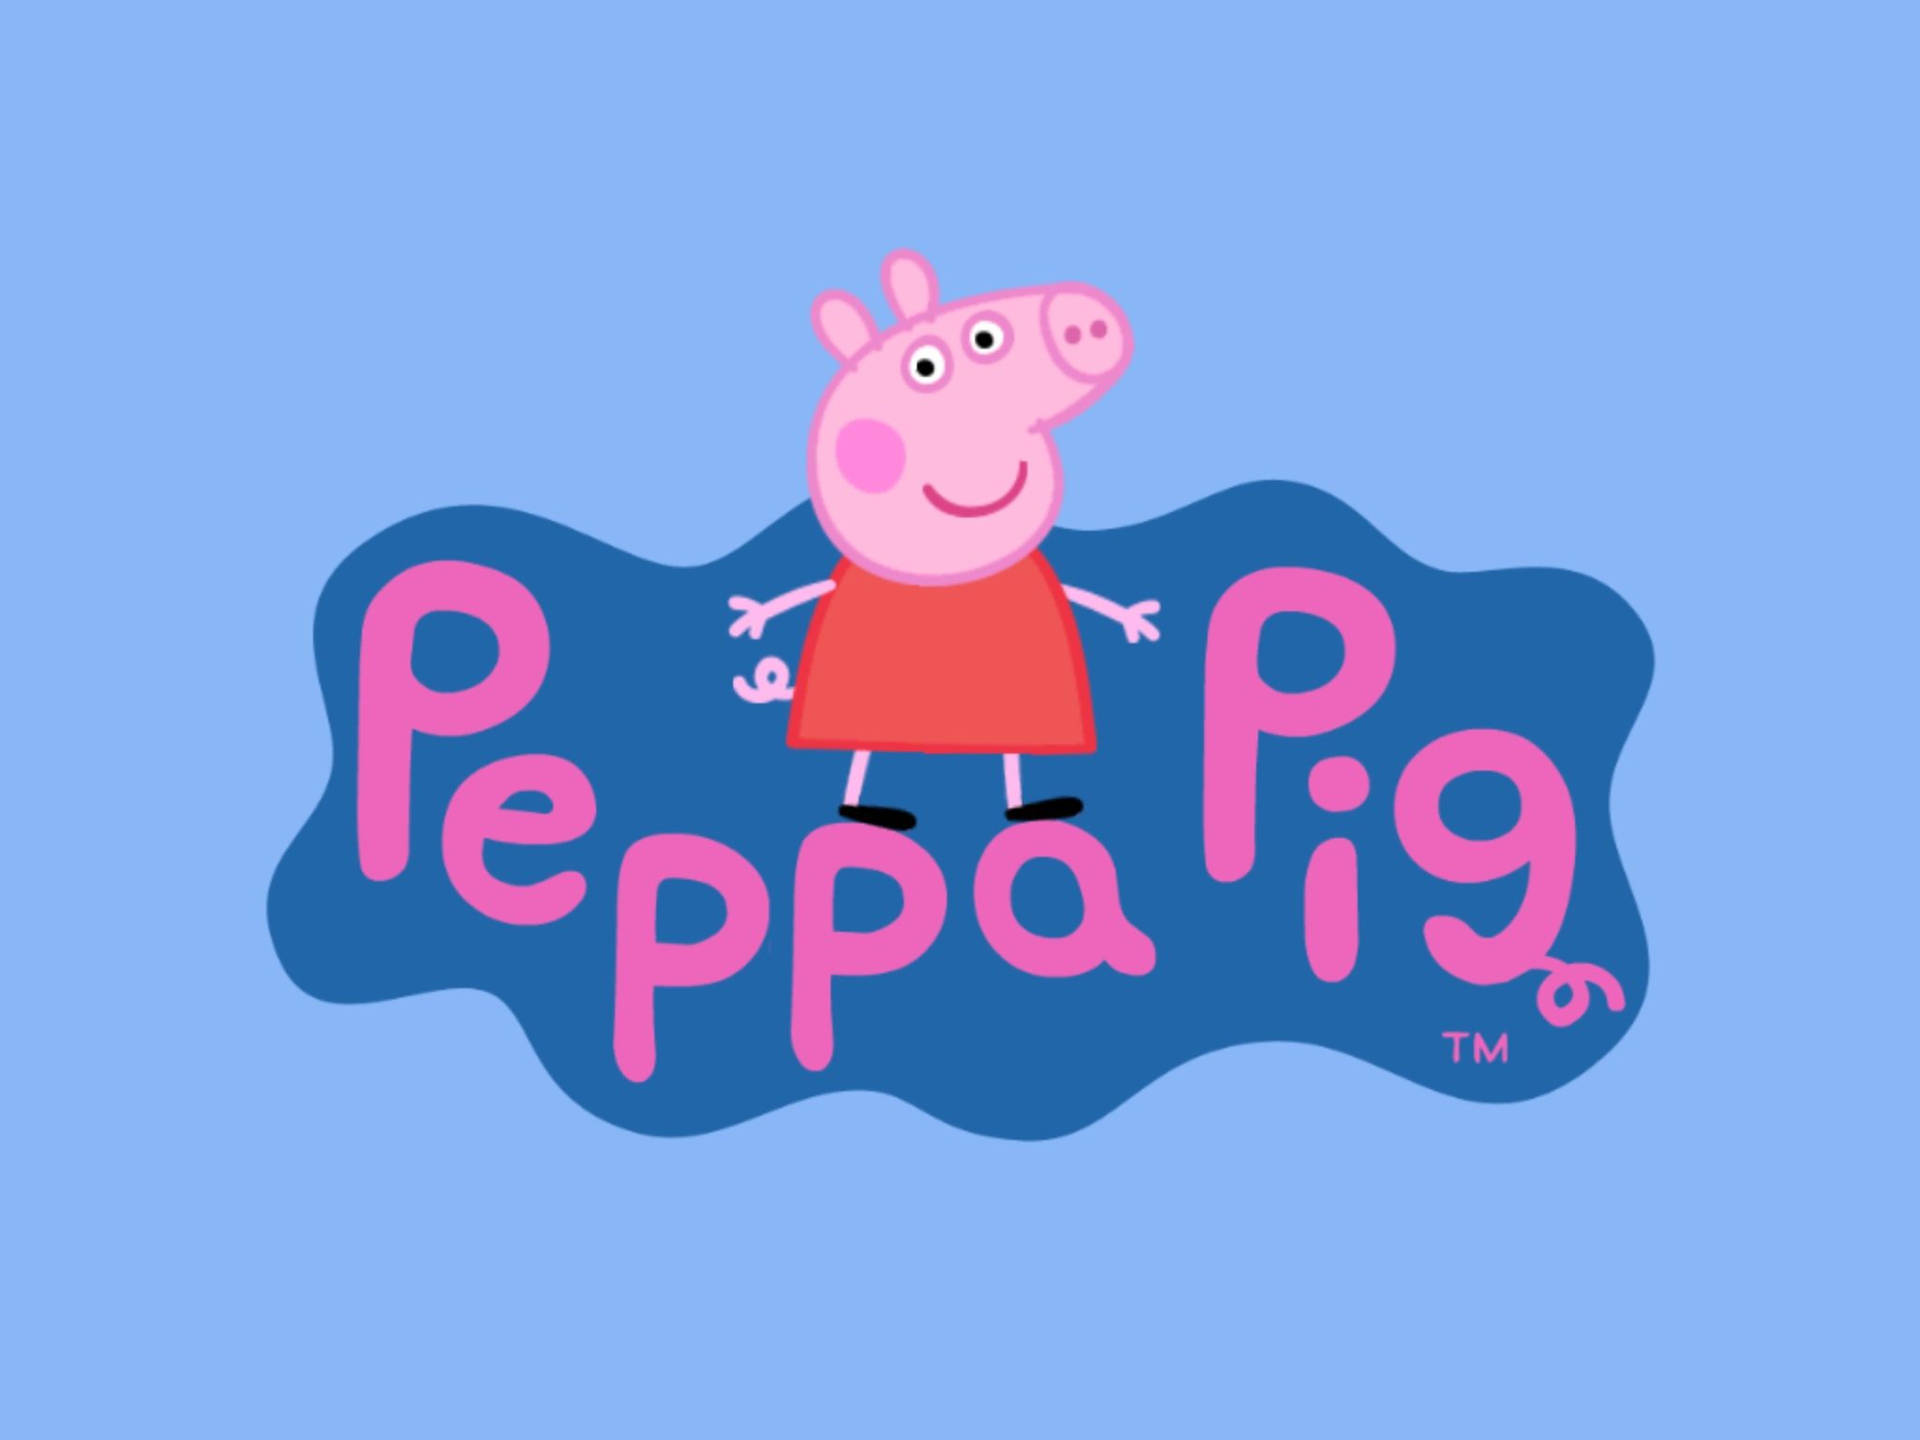 Peppa Pig title logo in blue wallpaper.